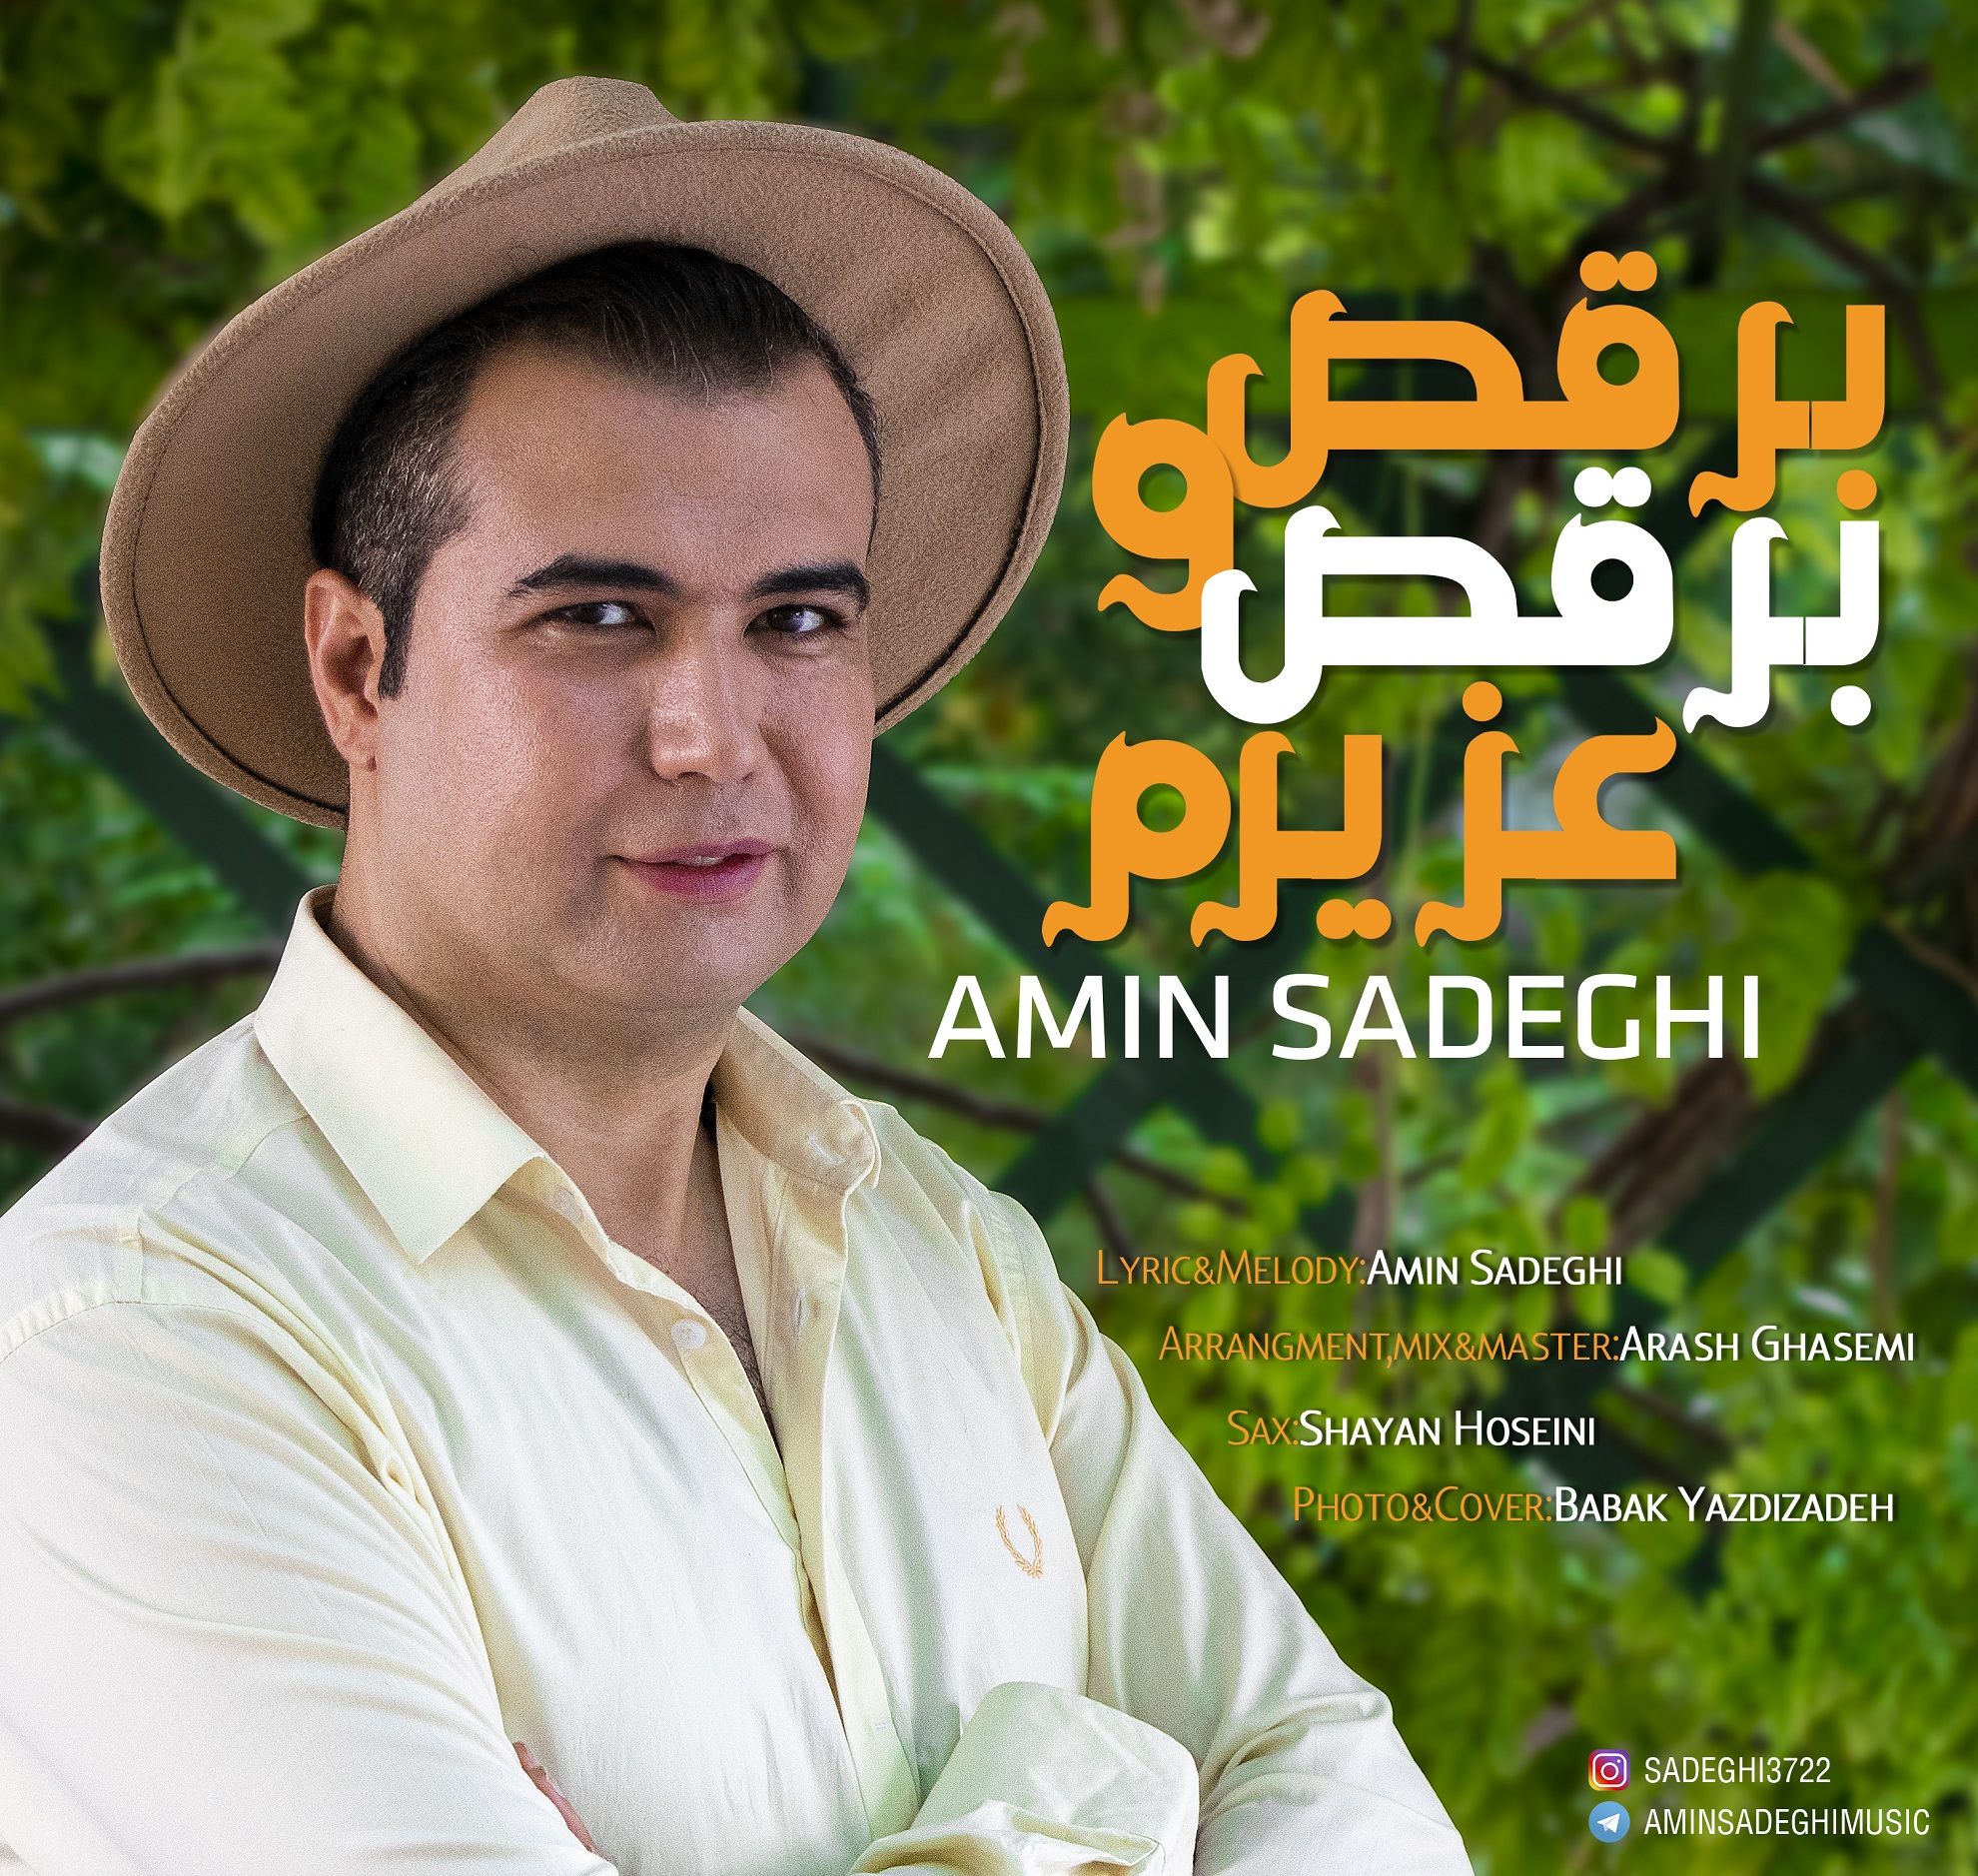  دانلود آهنگ جدید امین صادقی - برقص و برقص عزیزم | Download New Music By Amin Sadeghi - Beraghso Beraghs Azizam